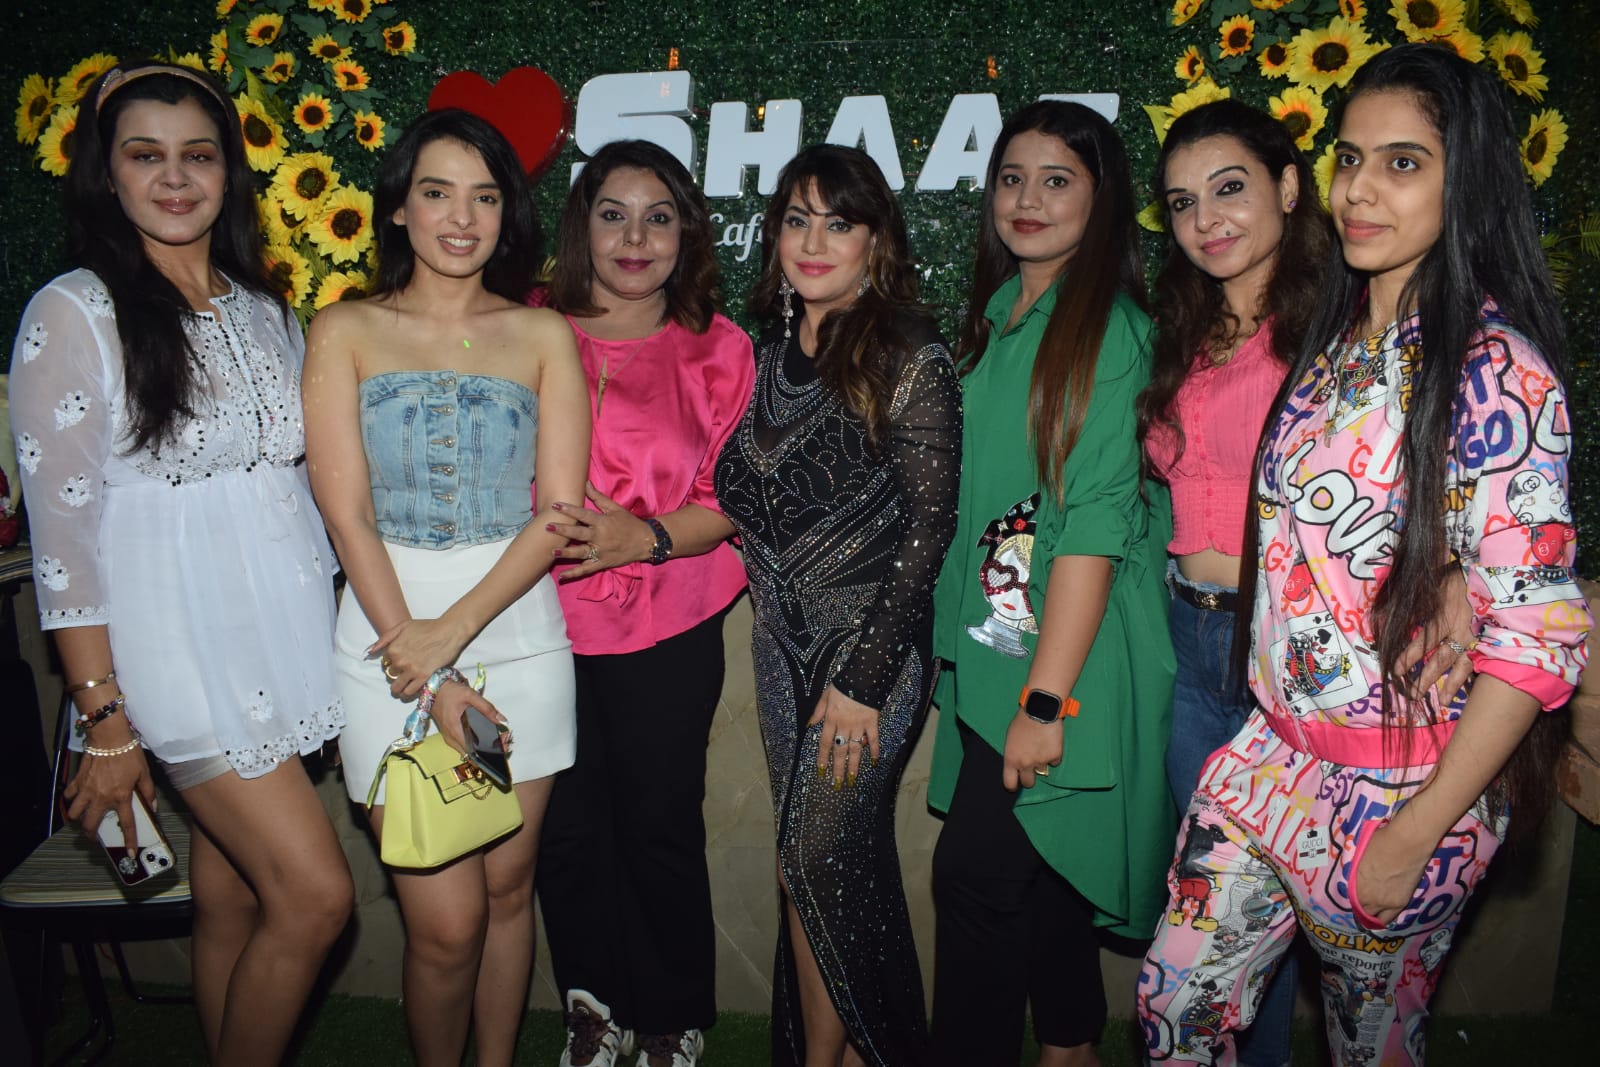 Shaz Khan's Shaz cafe inaugurated in the presence of Bollywood stars